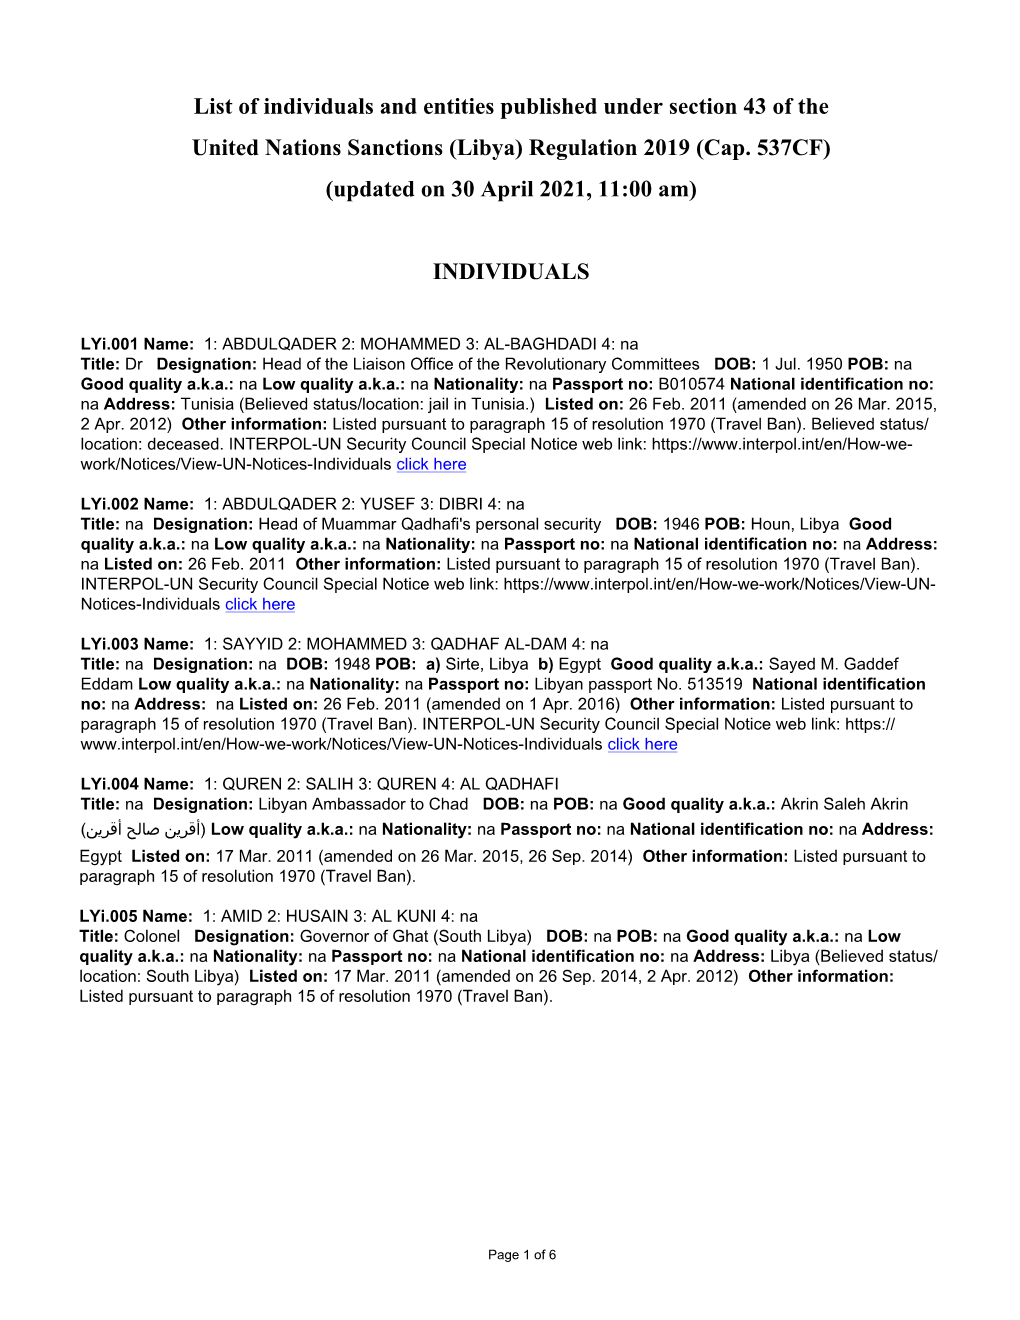 Libya) Regulation 2019 (Cap. 537CF) (Updated on 30 April 2021, 11:00 Am